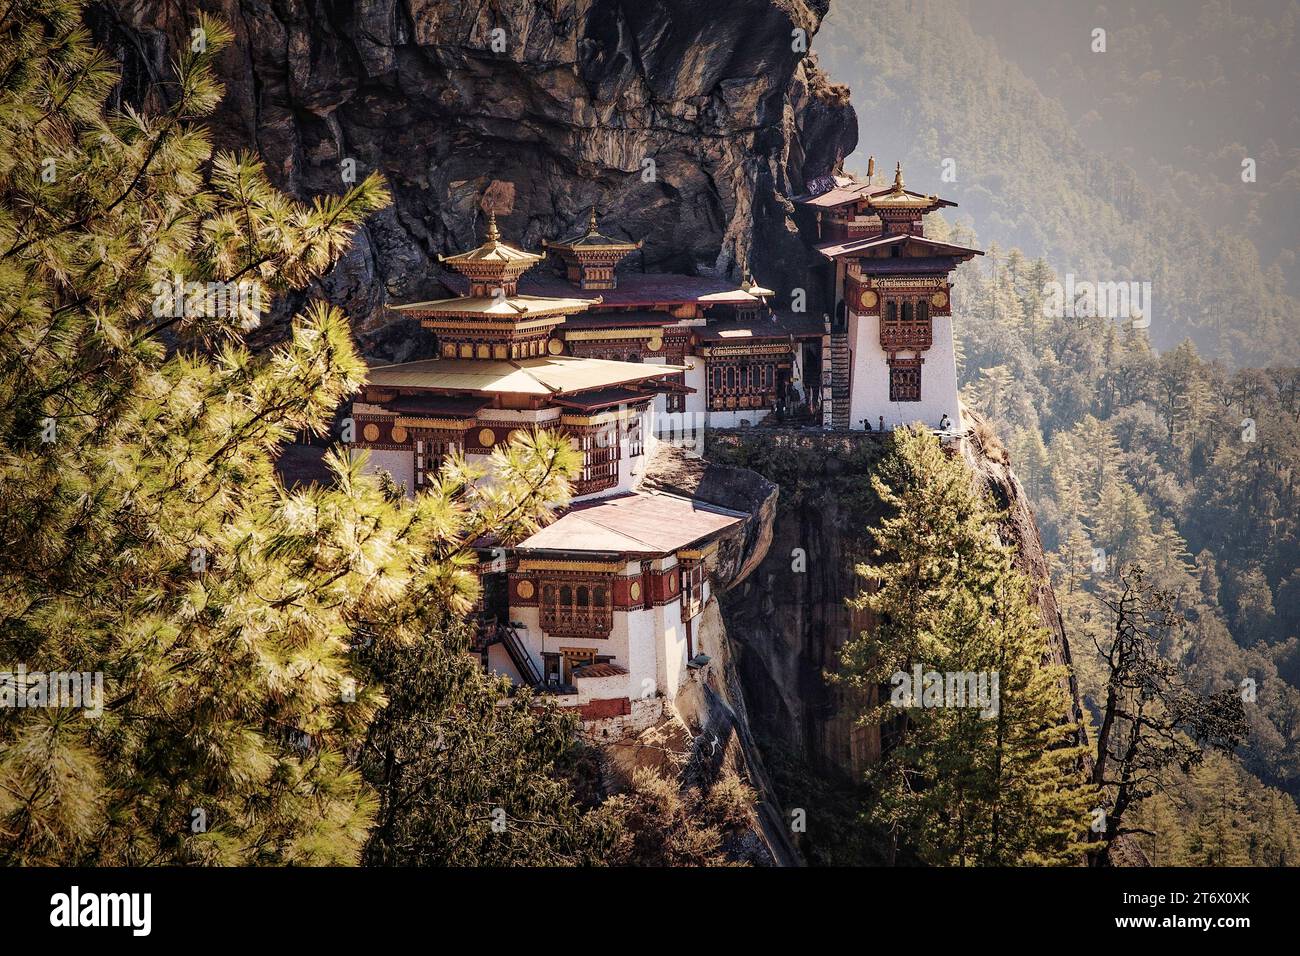 The Taktsang Palphug Monastery or the Tigers Nest near Paro, Bhutan clings to a mountain cliff. Stock Photo